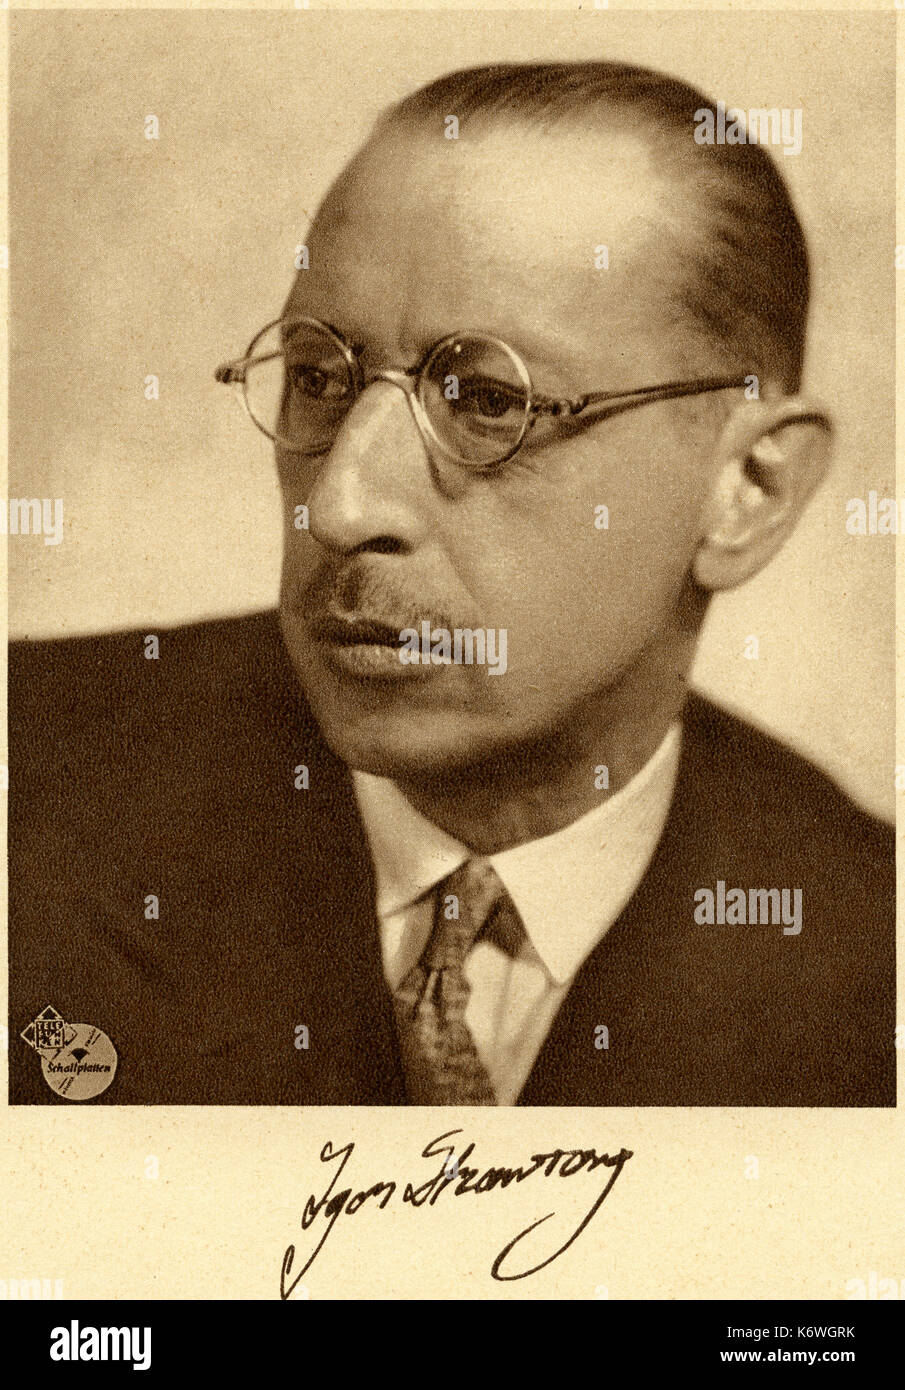 Igor Stravinsky at time of 'Jeu de Cartes', 1937. Russian composer, 1882-1971.  Photo by Telefunkenplatten. Stock Photo